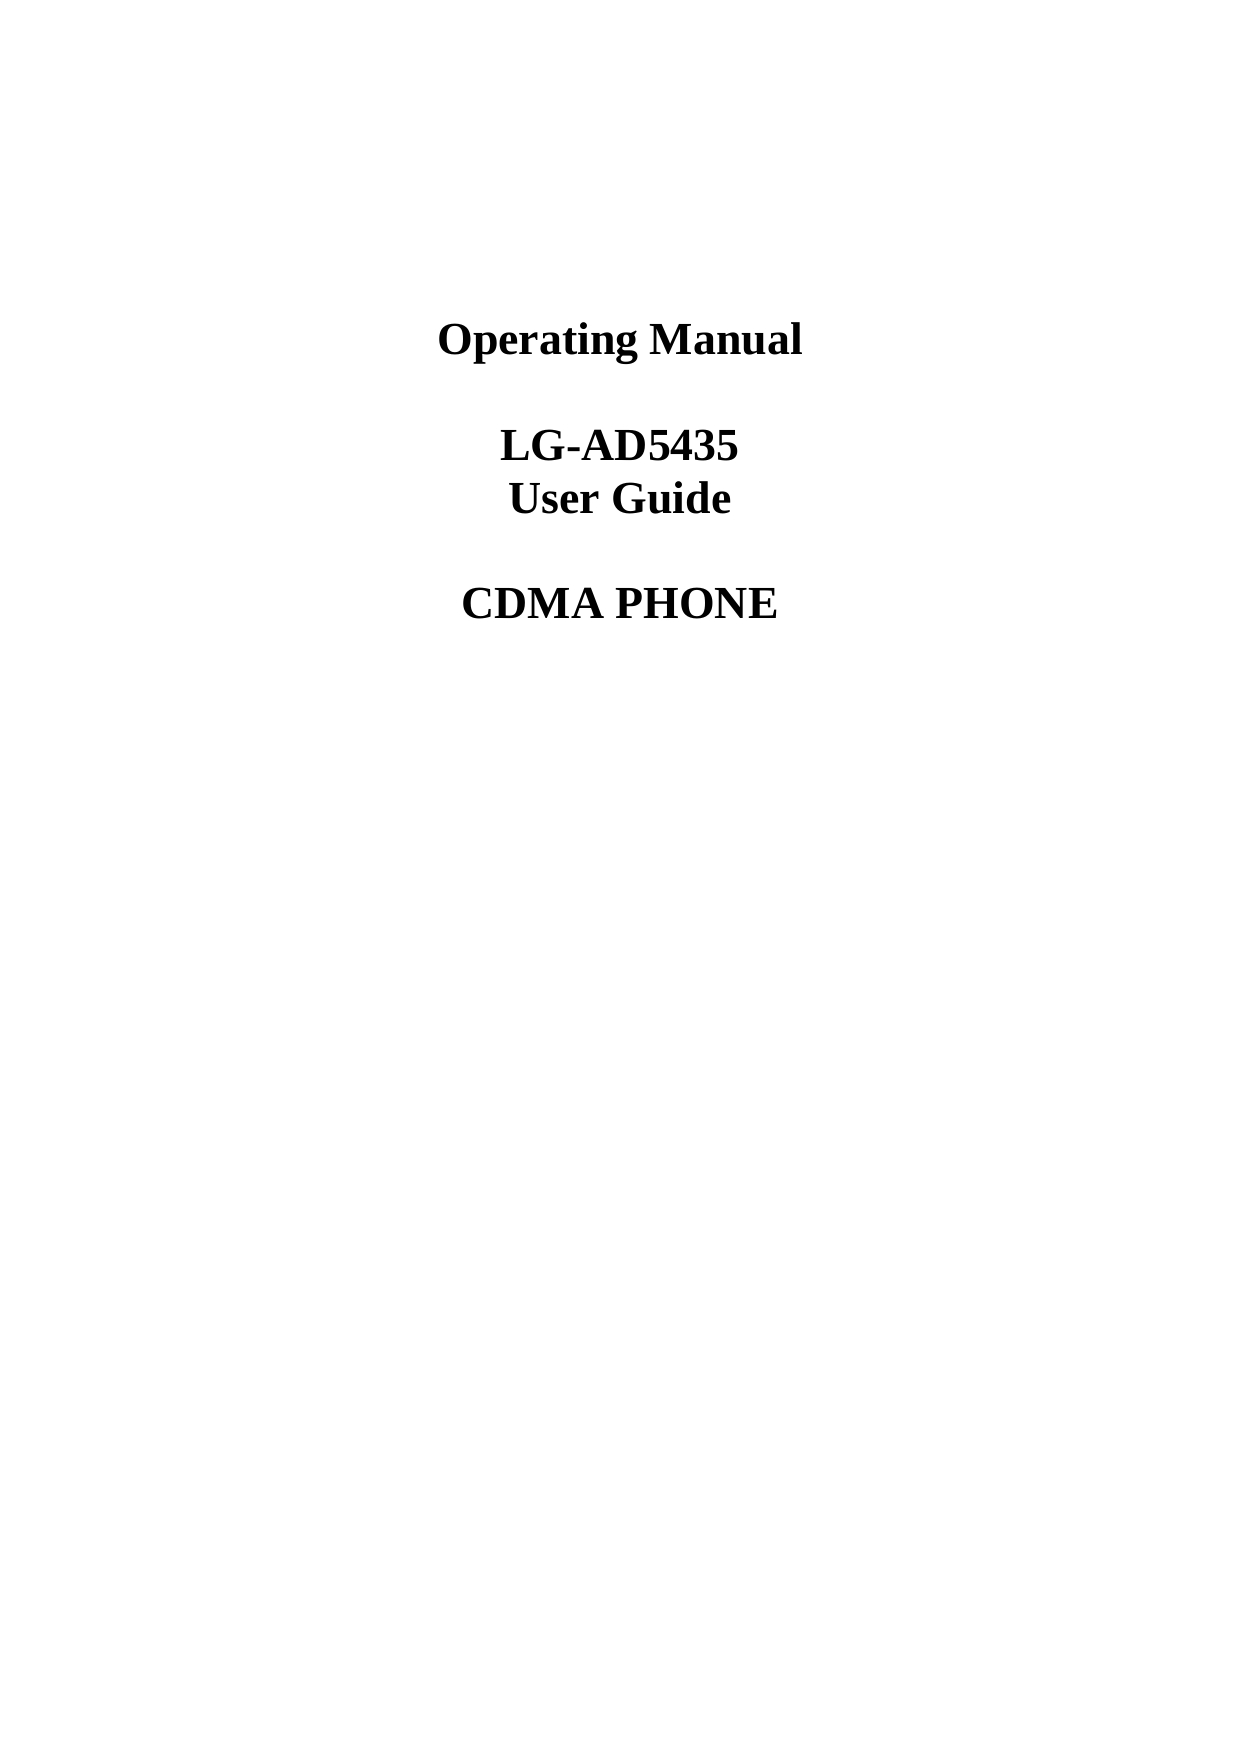   Operating Manual  LG-AD5435 User Guide  CDMA PHONE                          